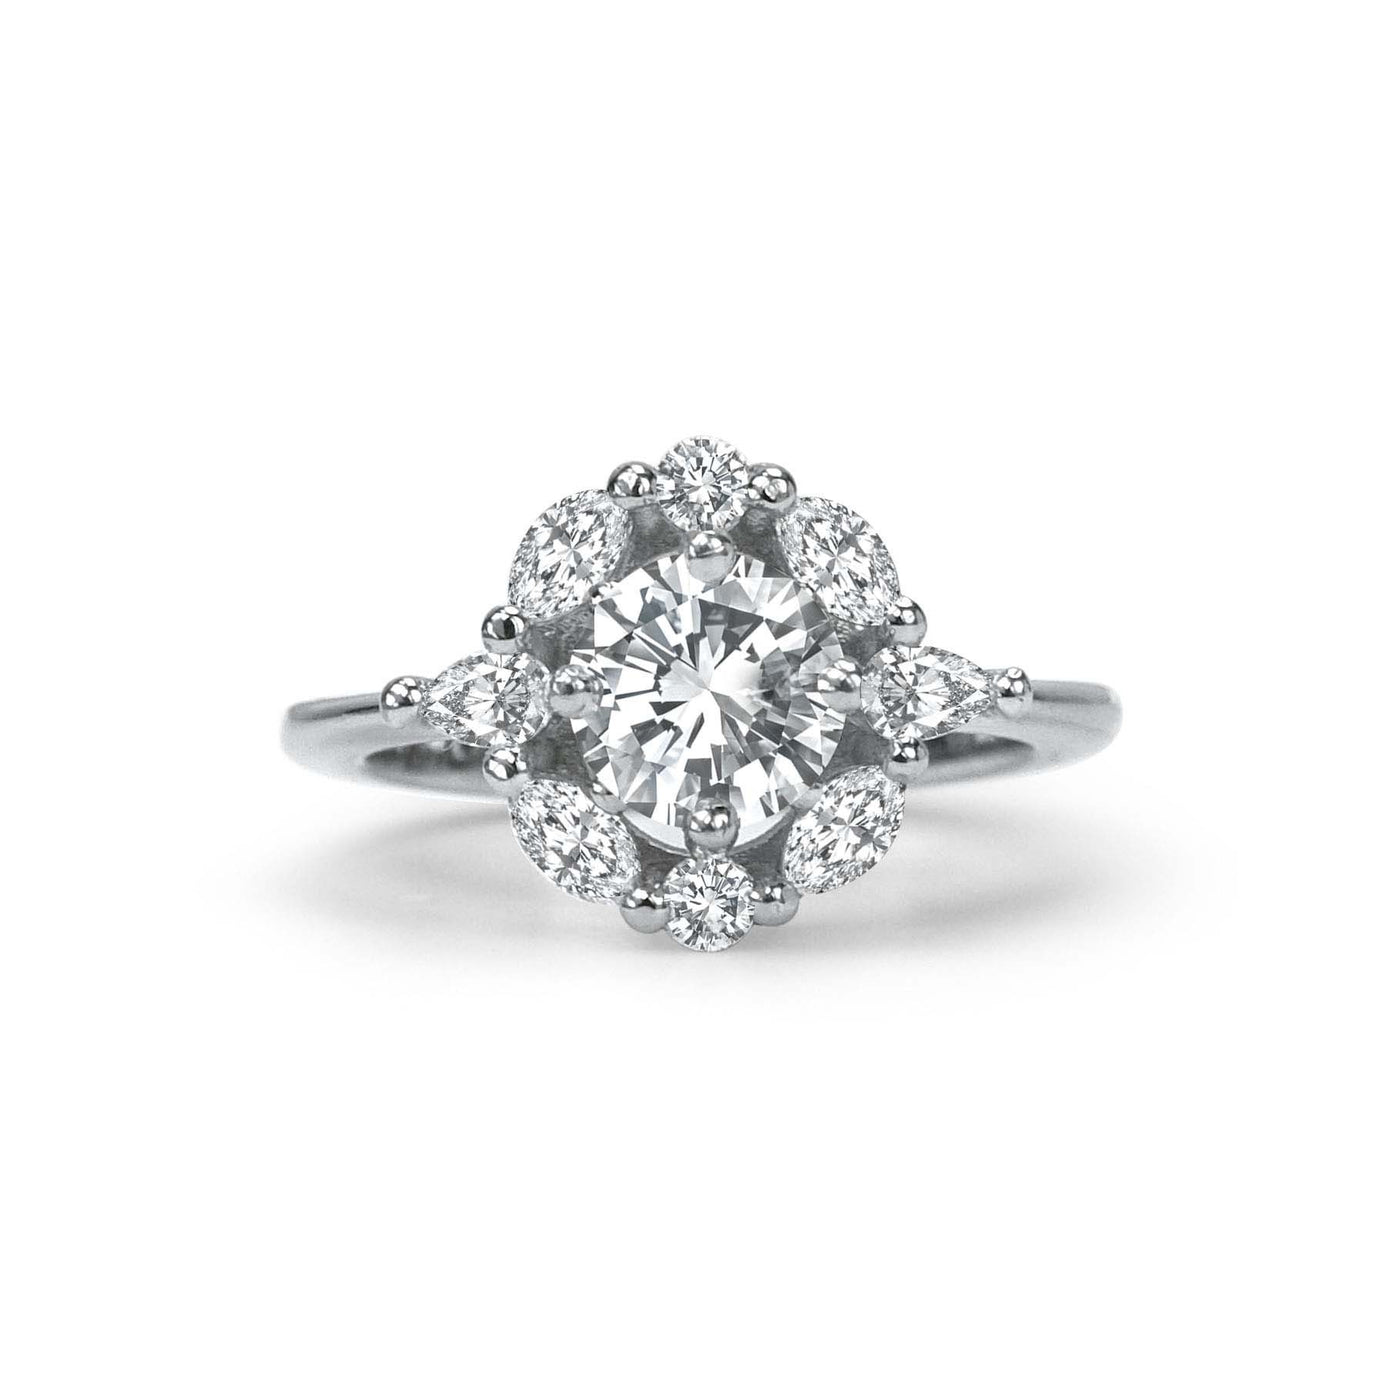 Vintage-Inspired Flower Engagement Ring